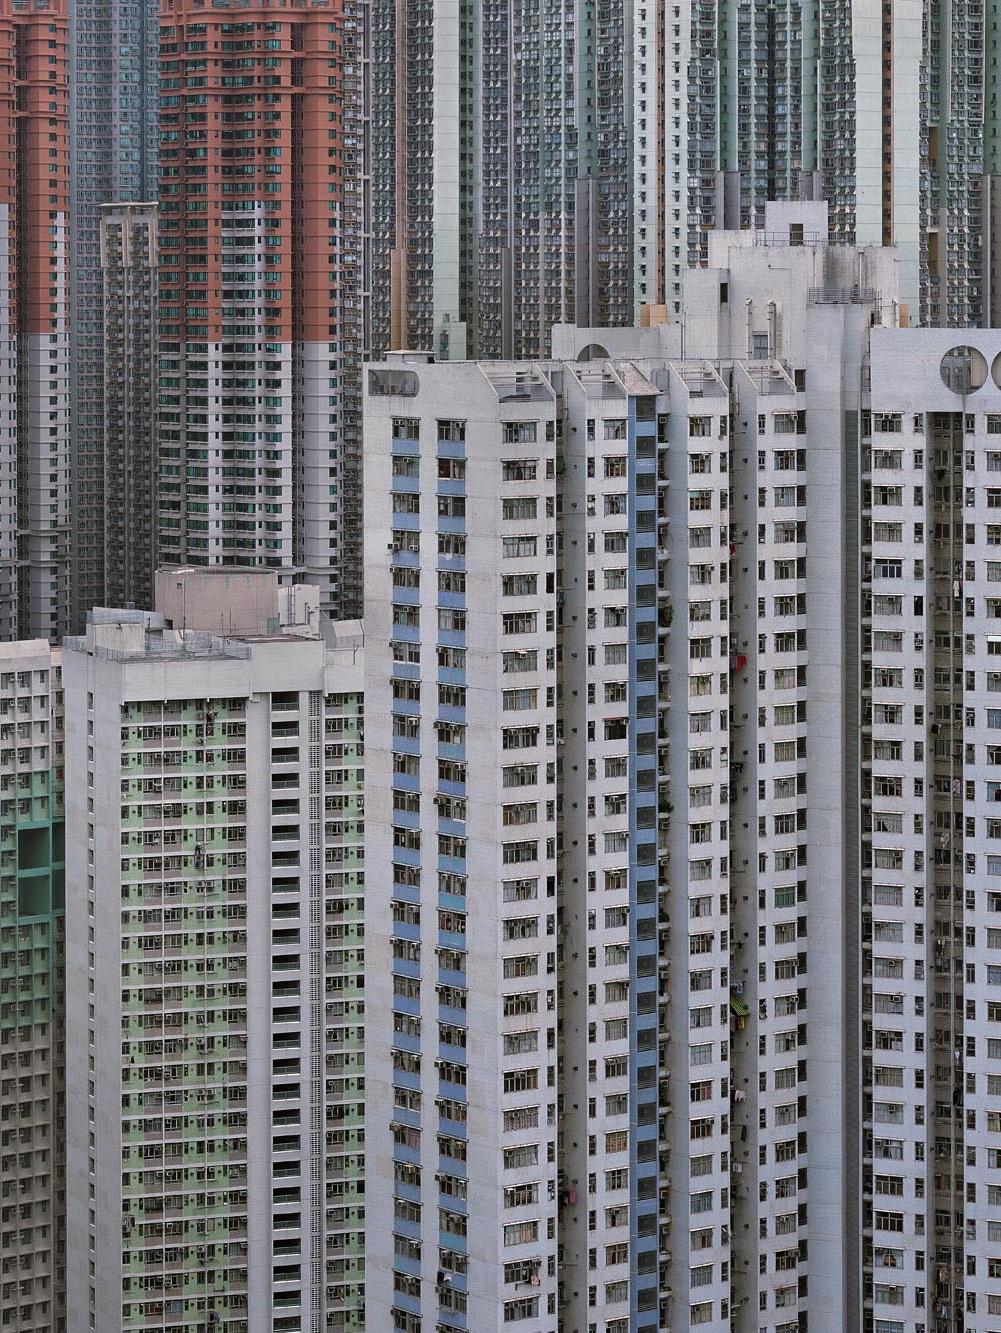 Architecture of Density #45 – Michael Wolf, City, Skyscraper, Architecture, Art For Sale 2